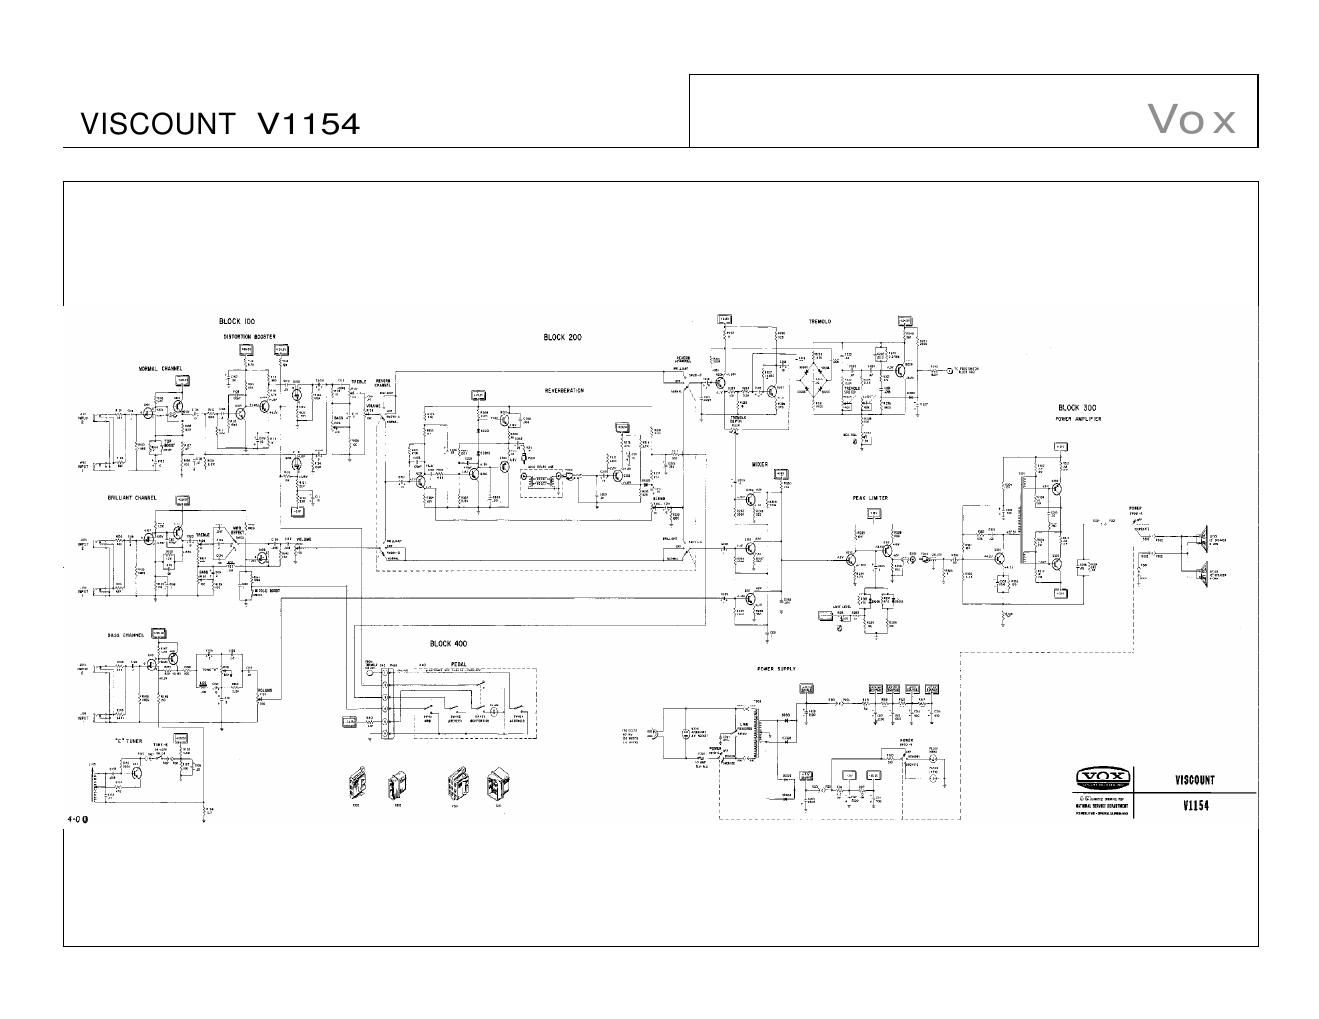 vox viscount v1154 schematic